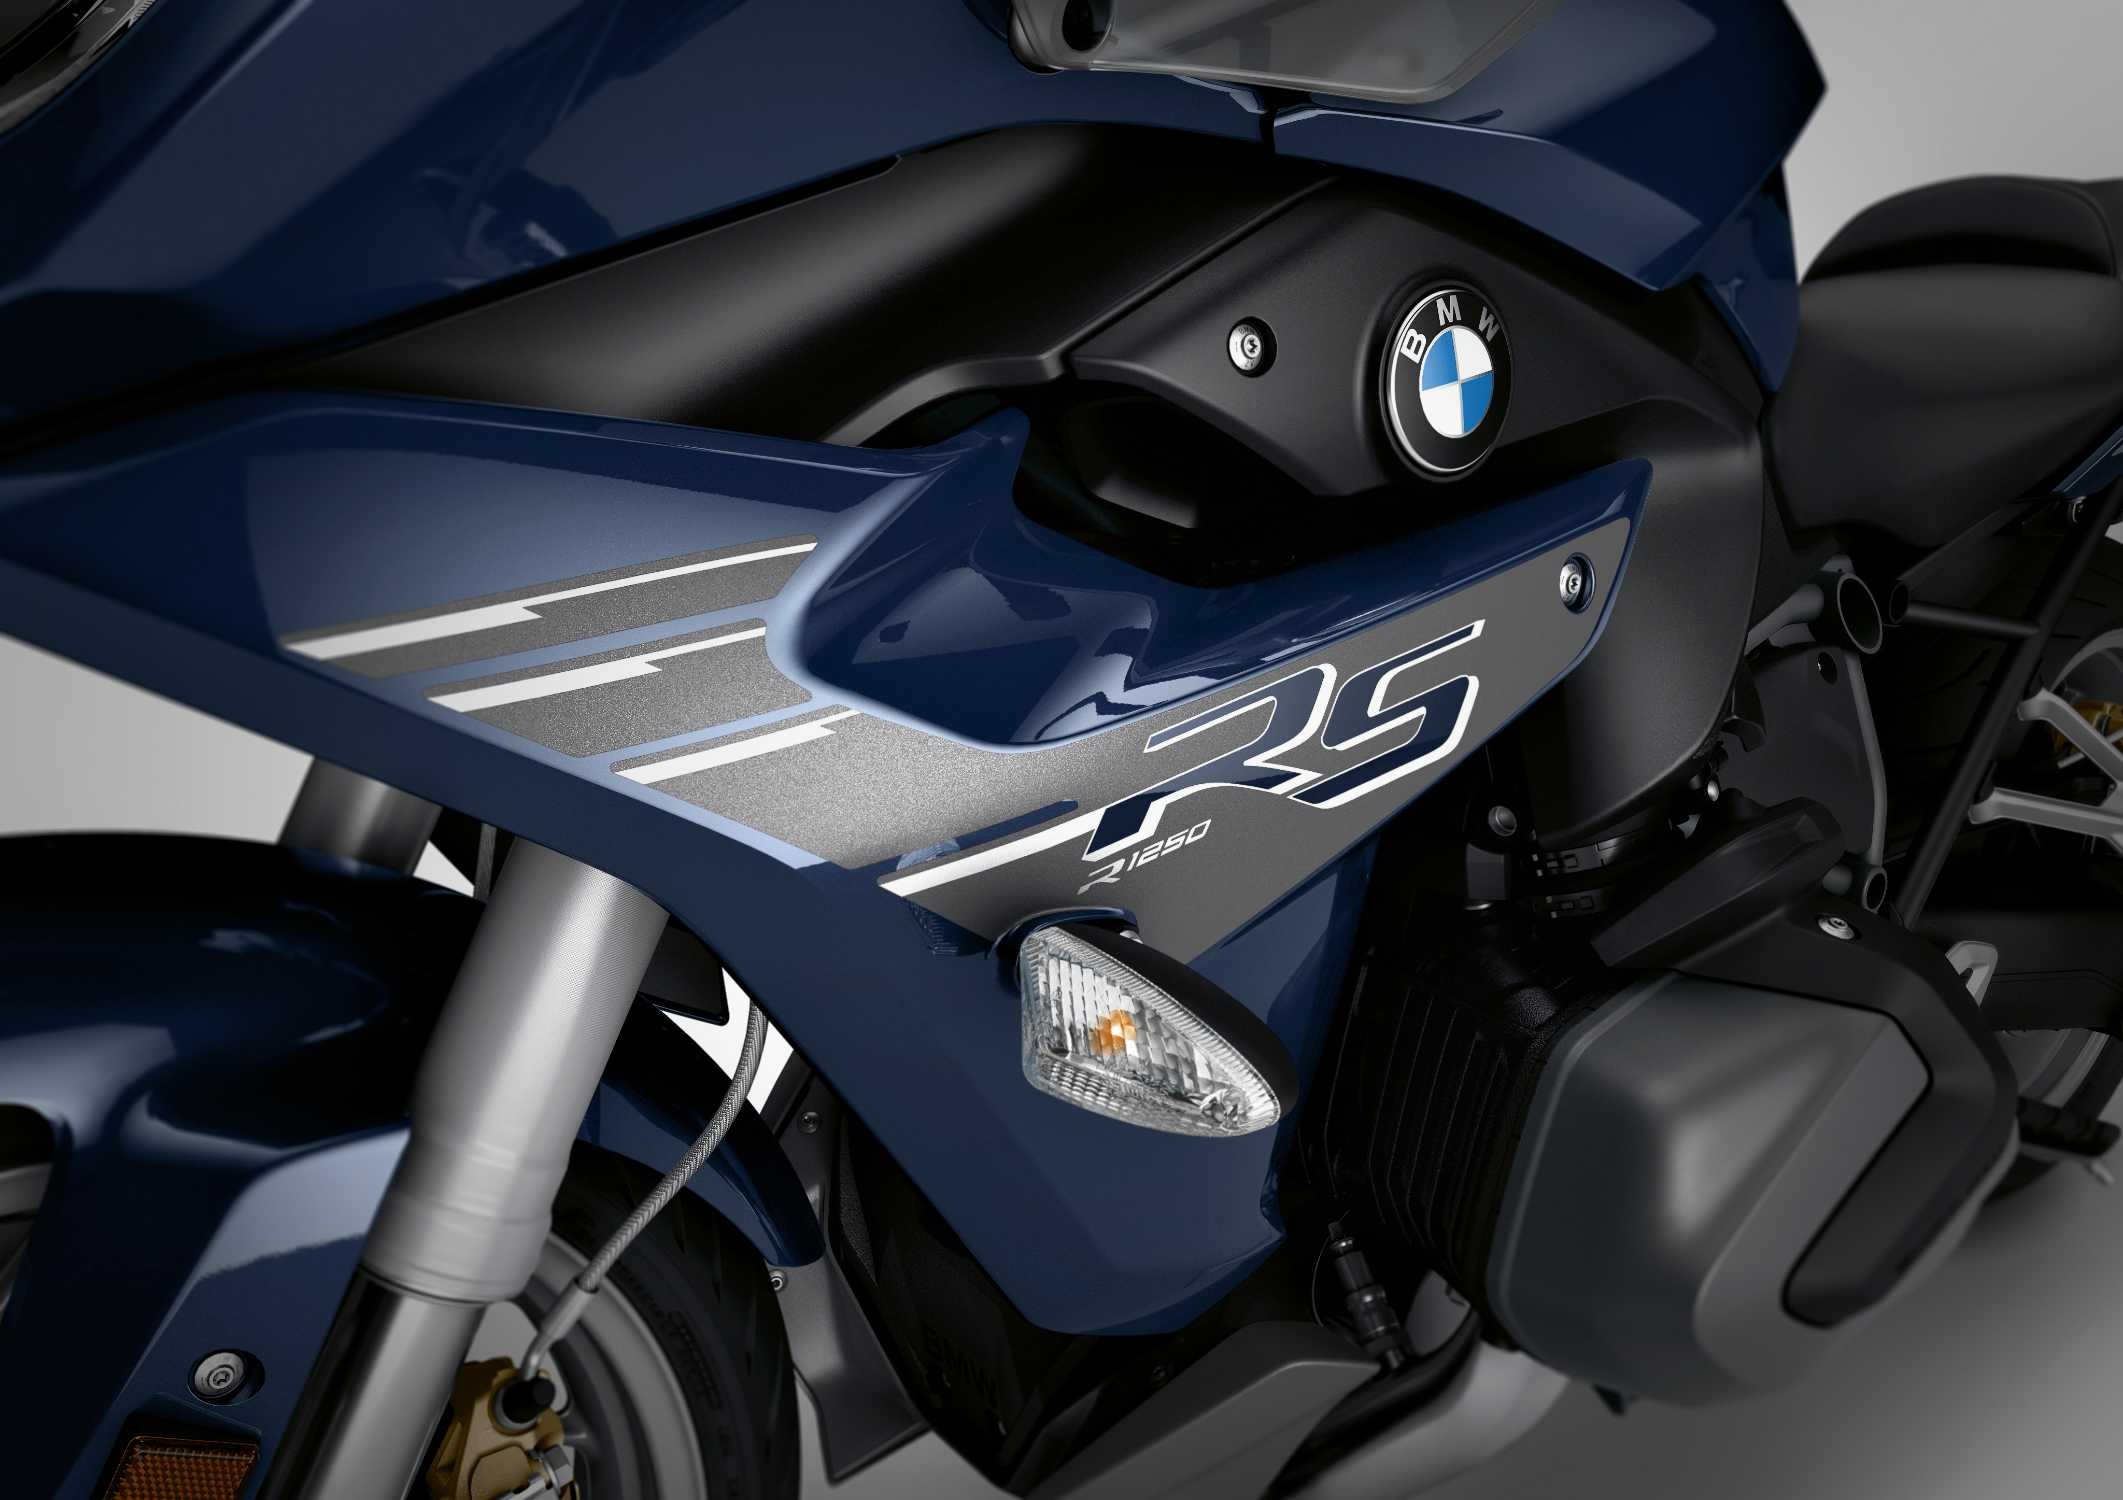 BMW R 1250 RS Exclusive, 112018 model, Exclusive design features, Premium biking experience, 2130x1500 HD Desktop